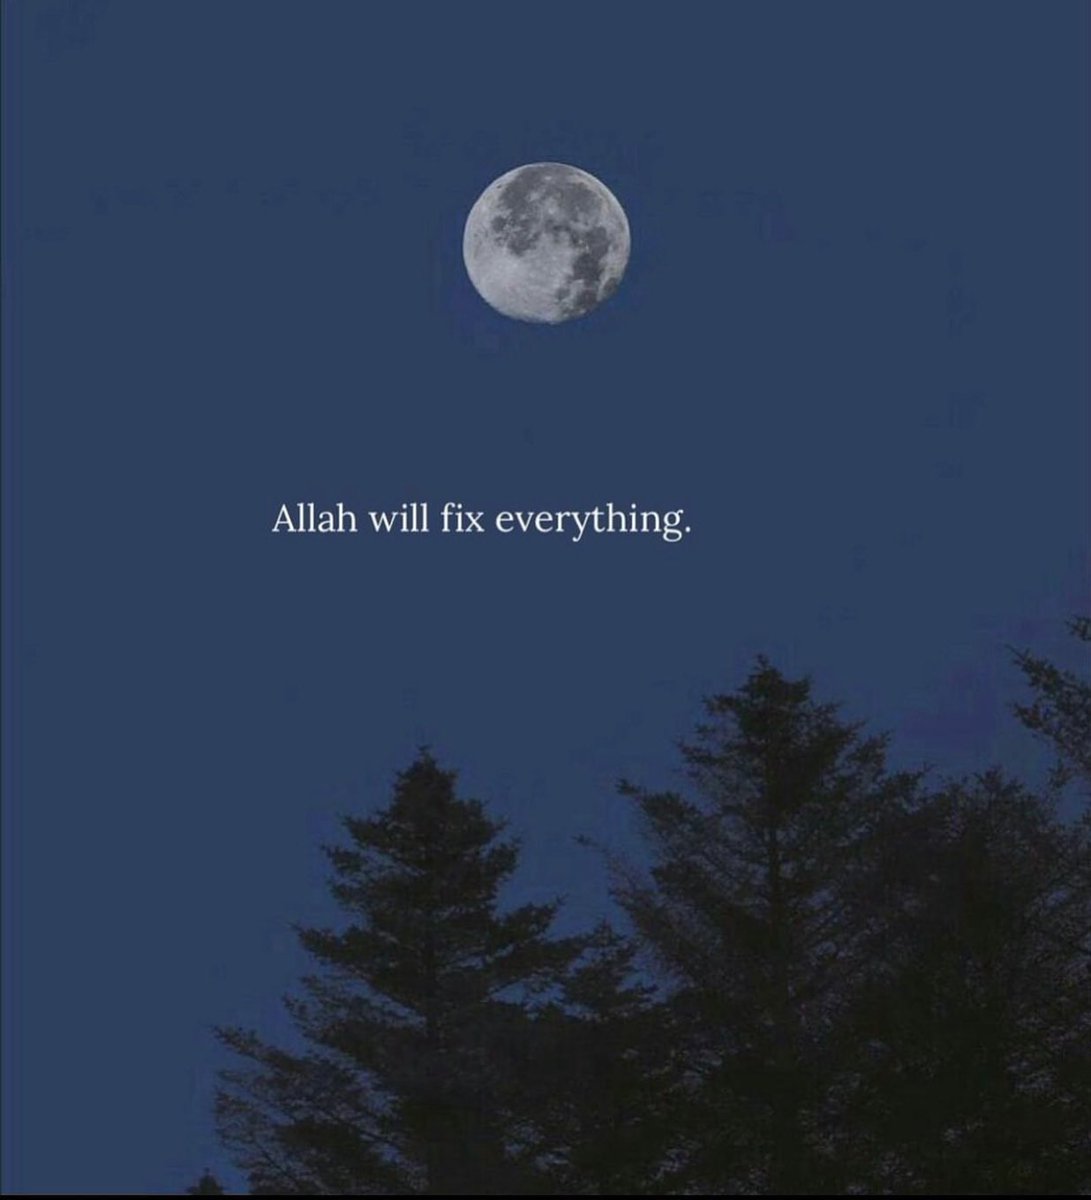 InshAllah, have faith ❤️